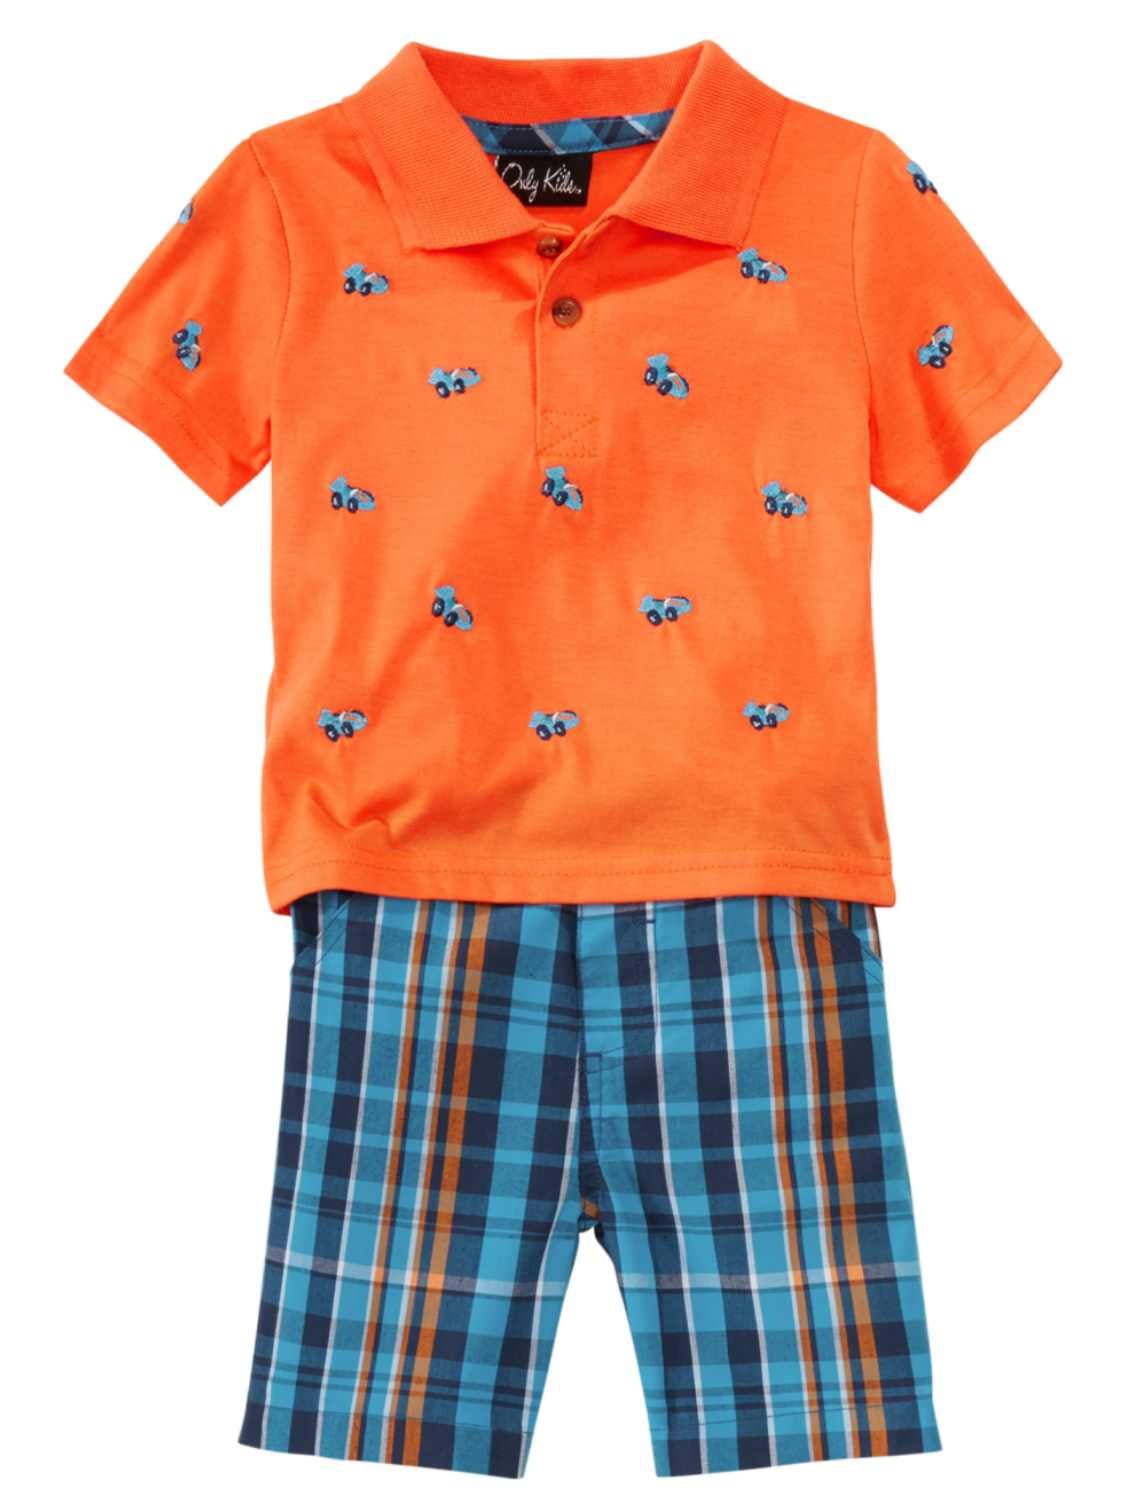 US Polo Assn Toddler Boys Checks Orange Woven Shirt Size 2T 3T 4T $32 